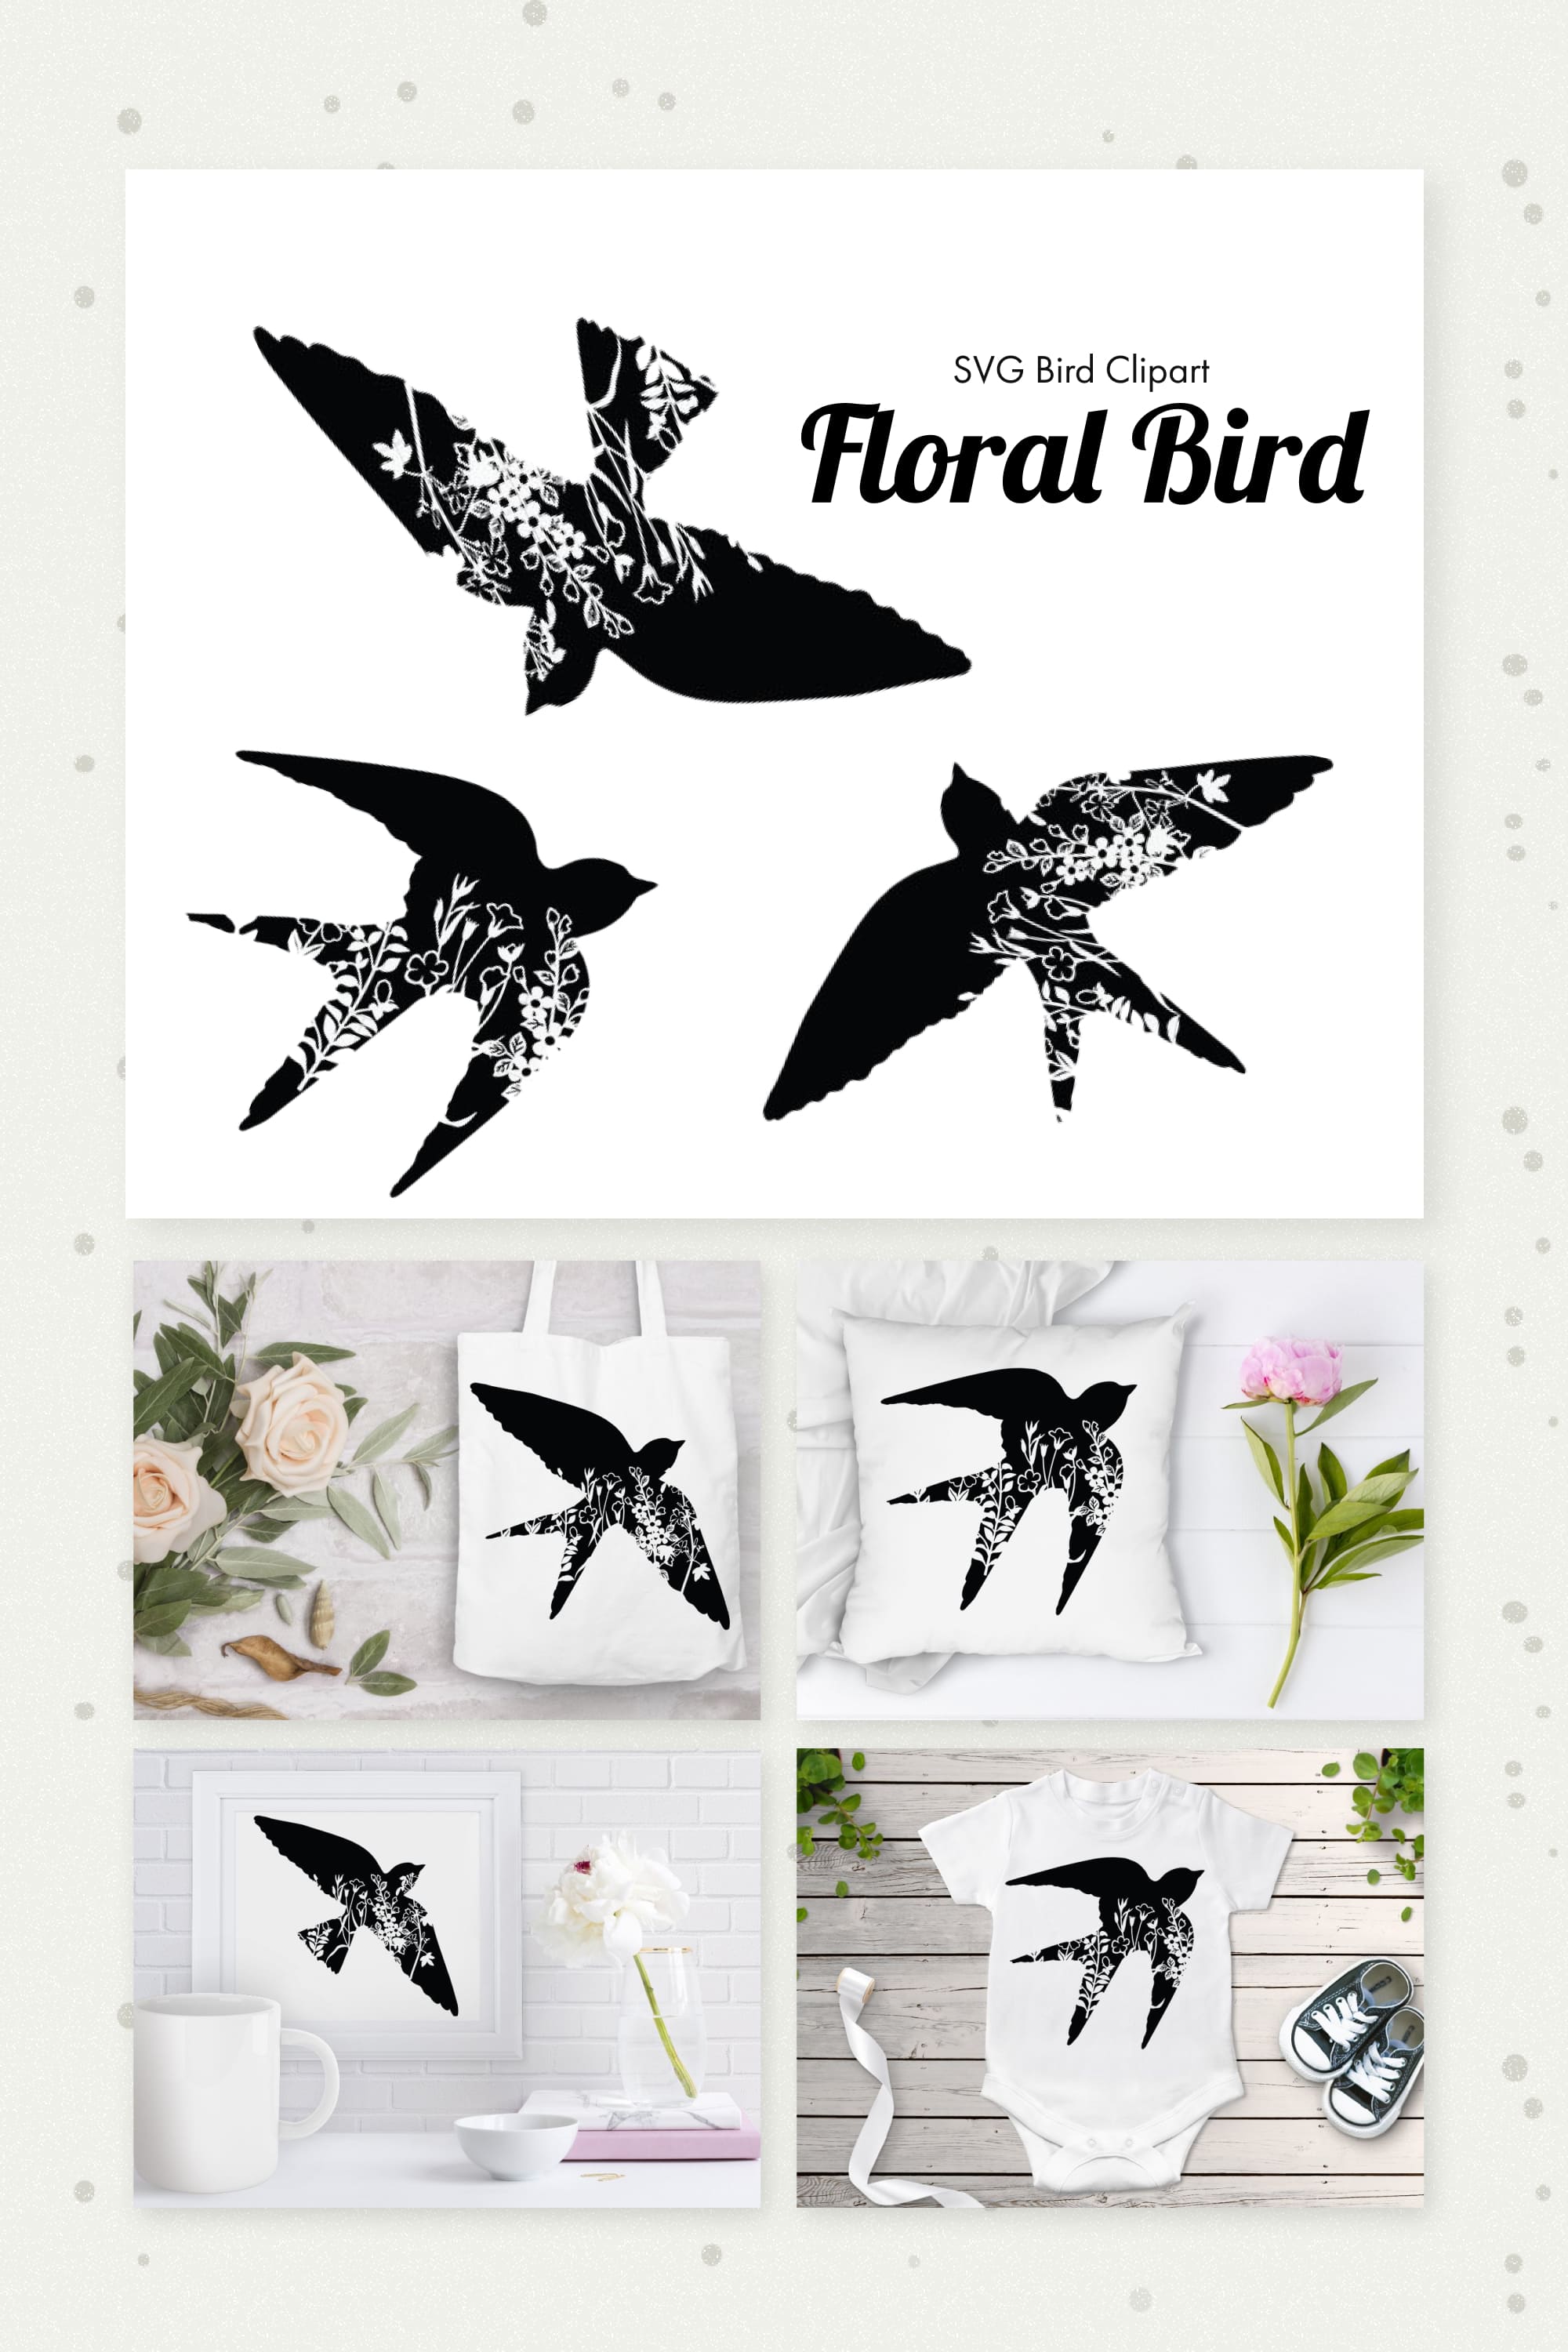 Floral Bird SVG - pinterest image preview.